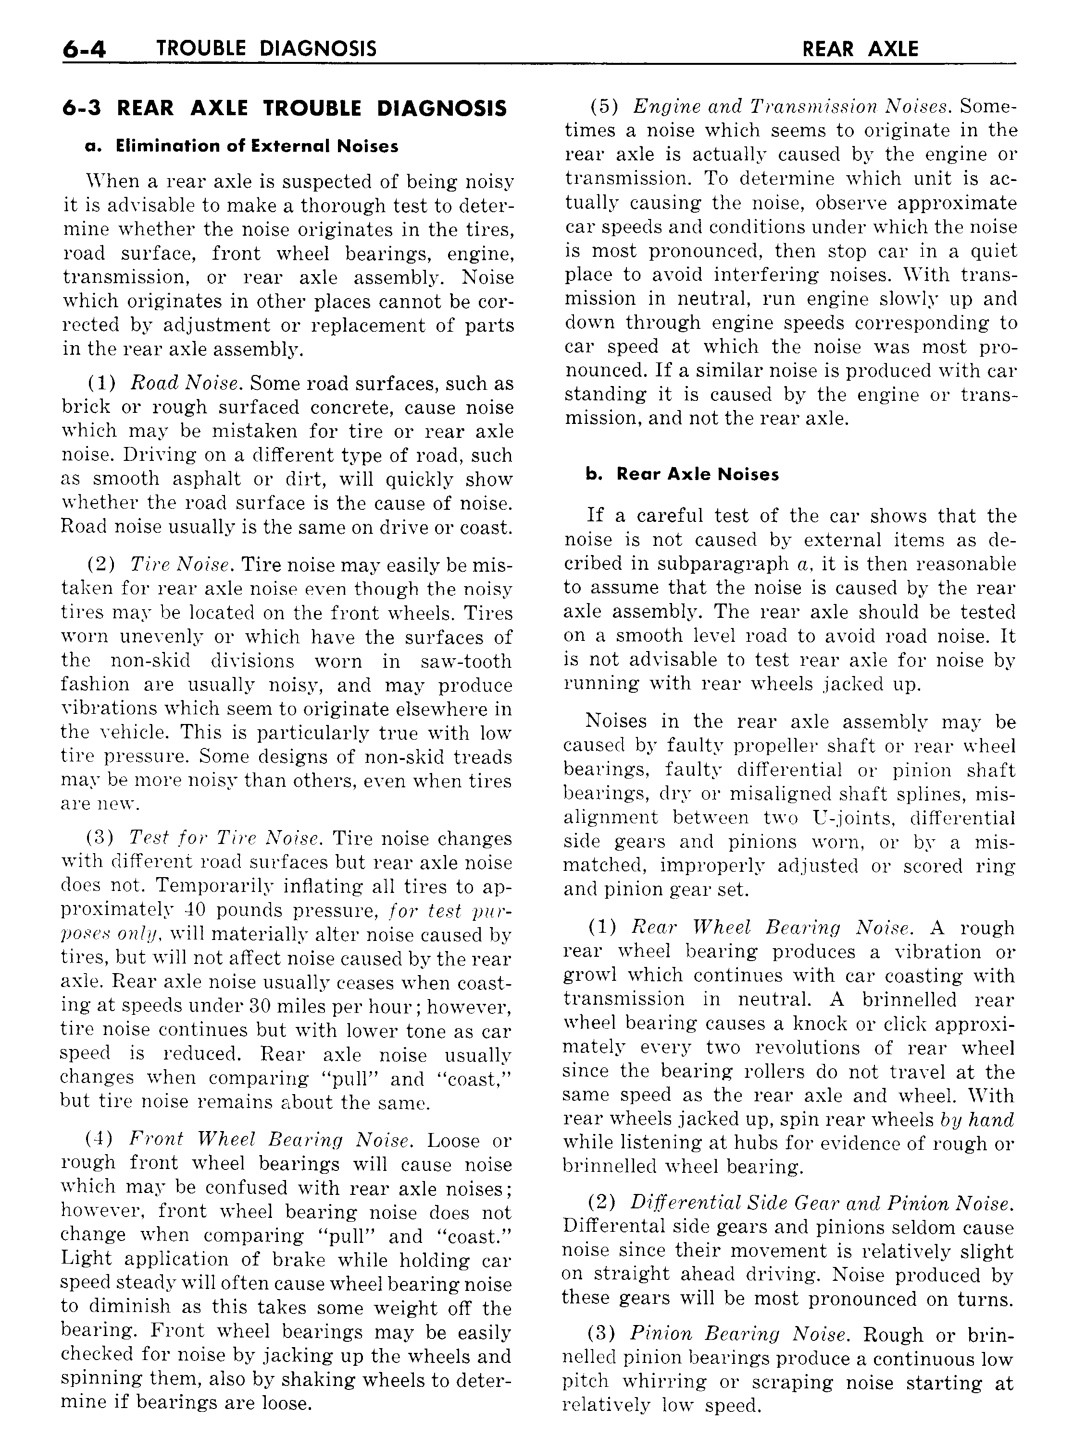 n_07 1957 Buick Shop Manual - Rear Axle-004-004.jpg